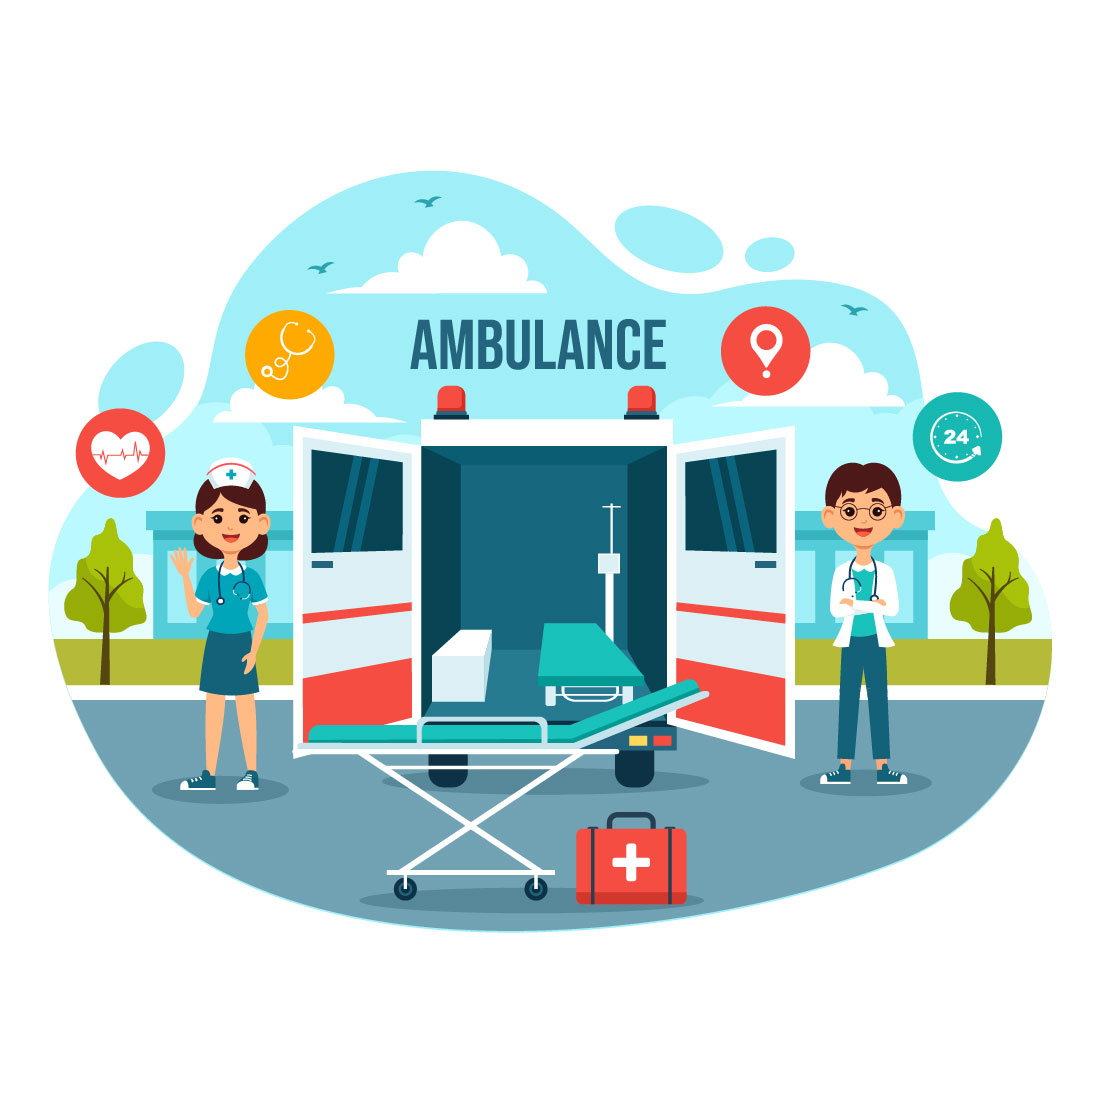 10 Ambulance Car Illustration preview image.